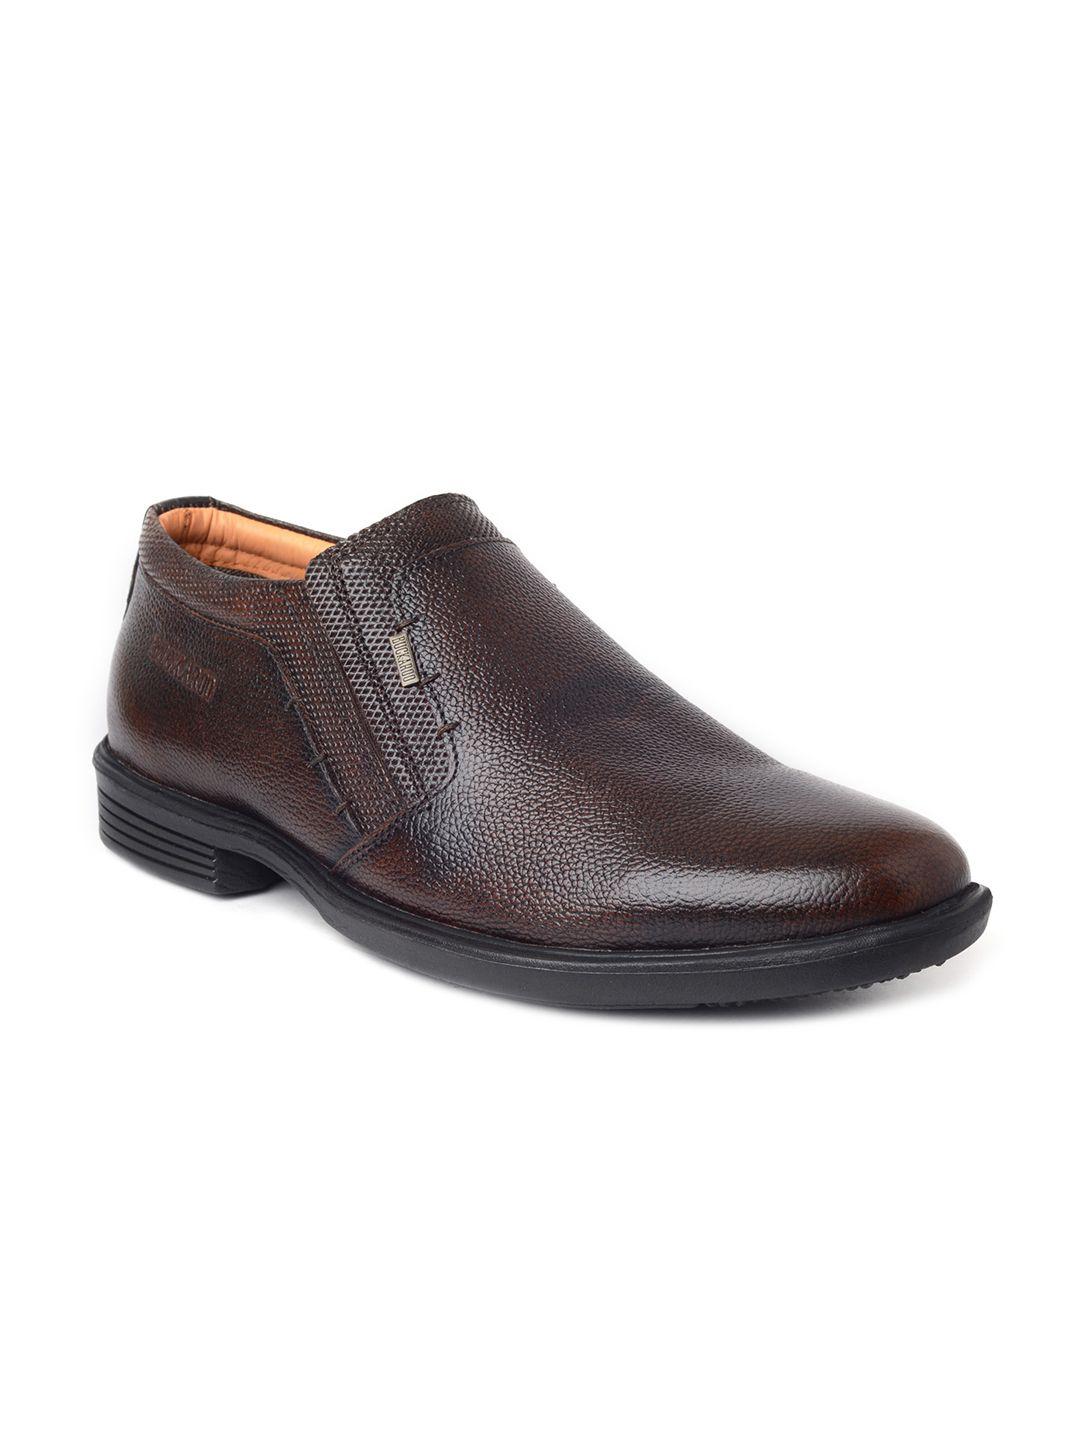 buckaroo men brown textured genuine leather formal slip-on shoes